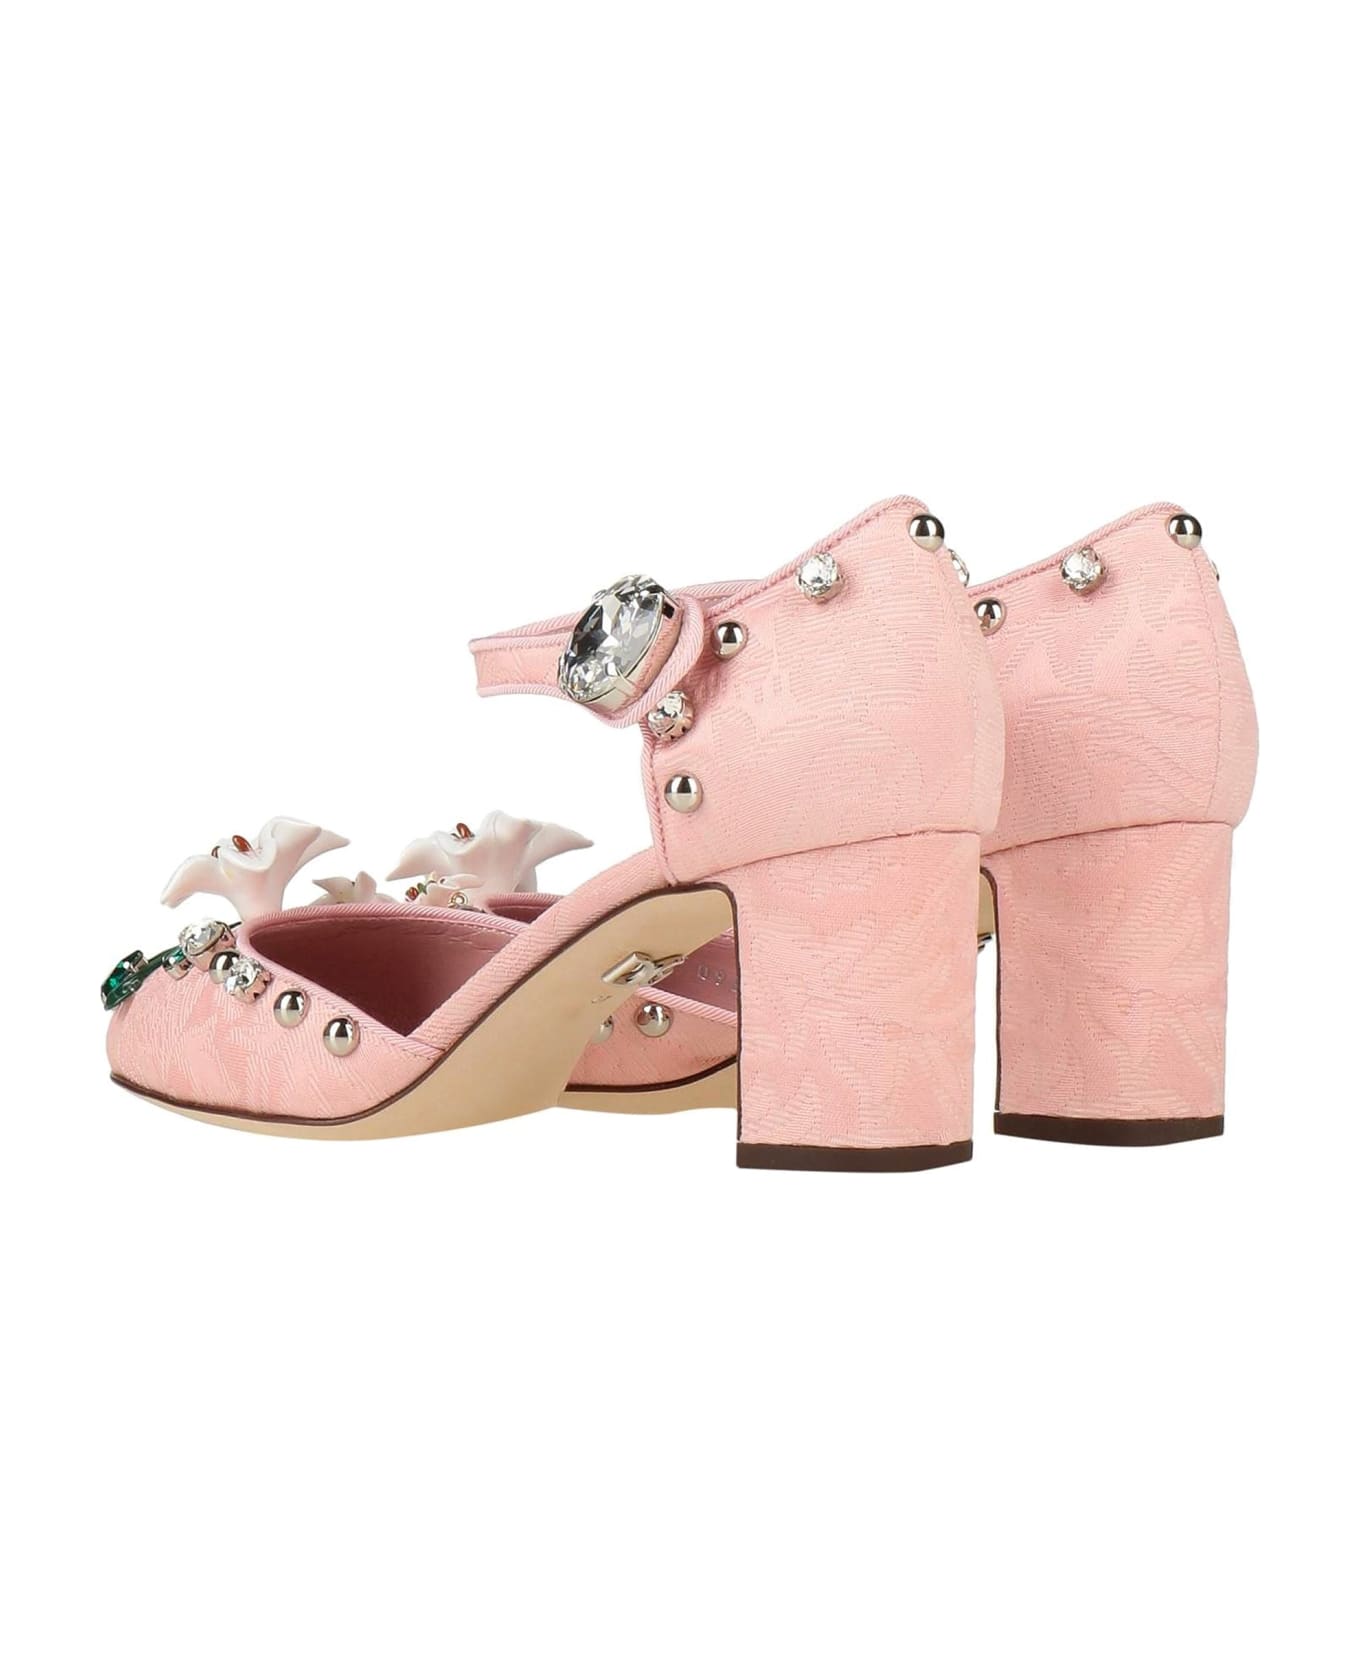 Dolce & Gabbana Vally Printed Pumps - Pink